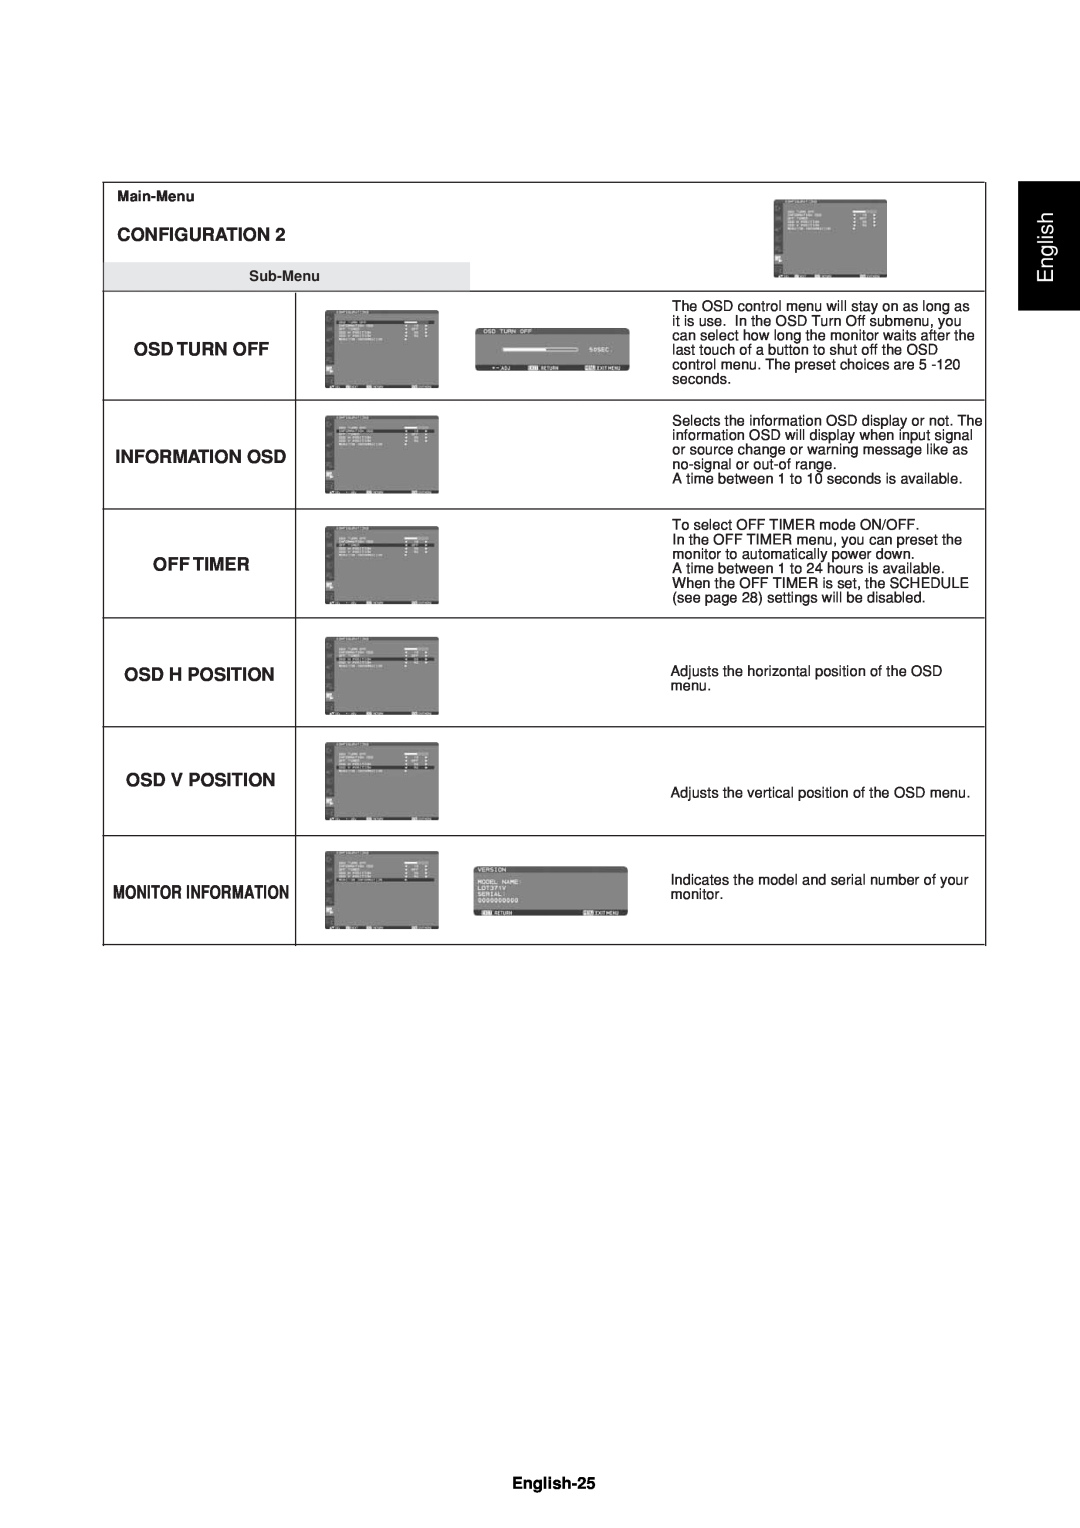 Mitsubishi Electronics LDT37IV (BH544), LDT32IV (BH548) manual English-25, Main-Menu, Sub-Menu, Monitor Information 